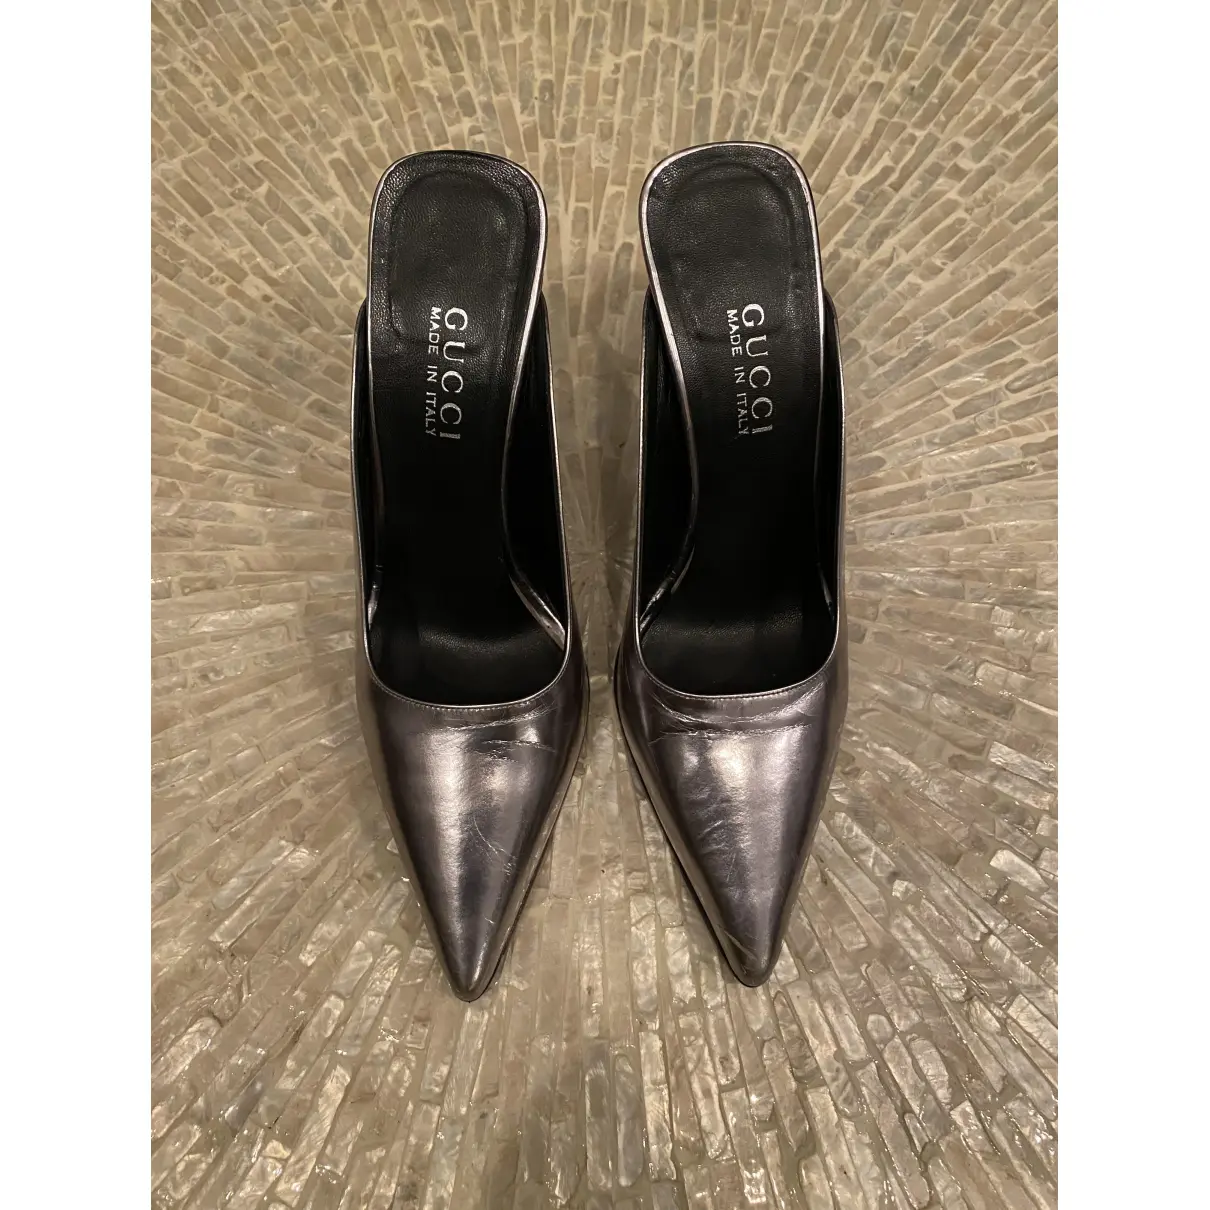 Buy Gucci Leather heels online - Vintage